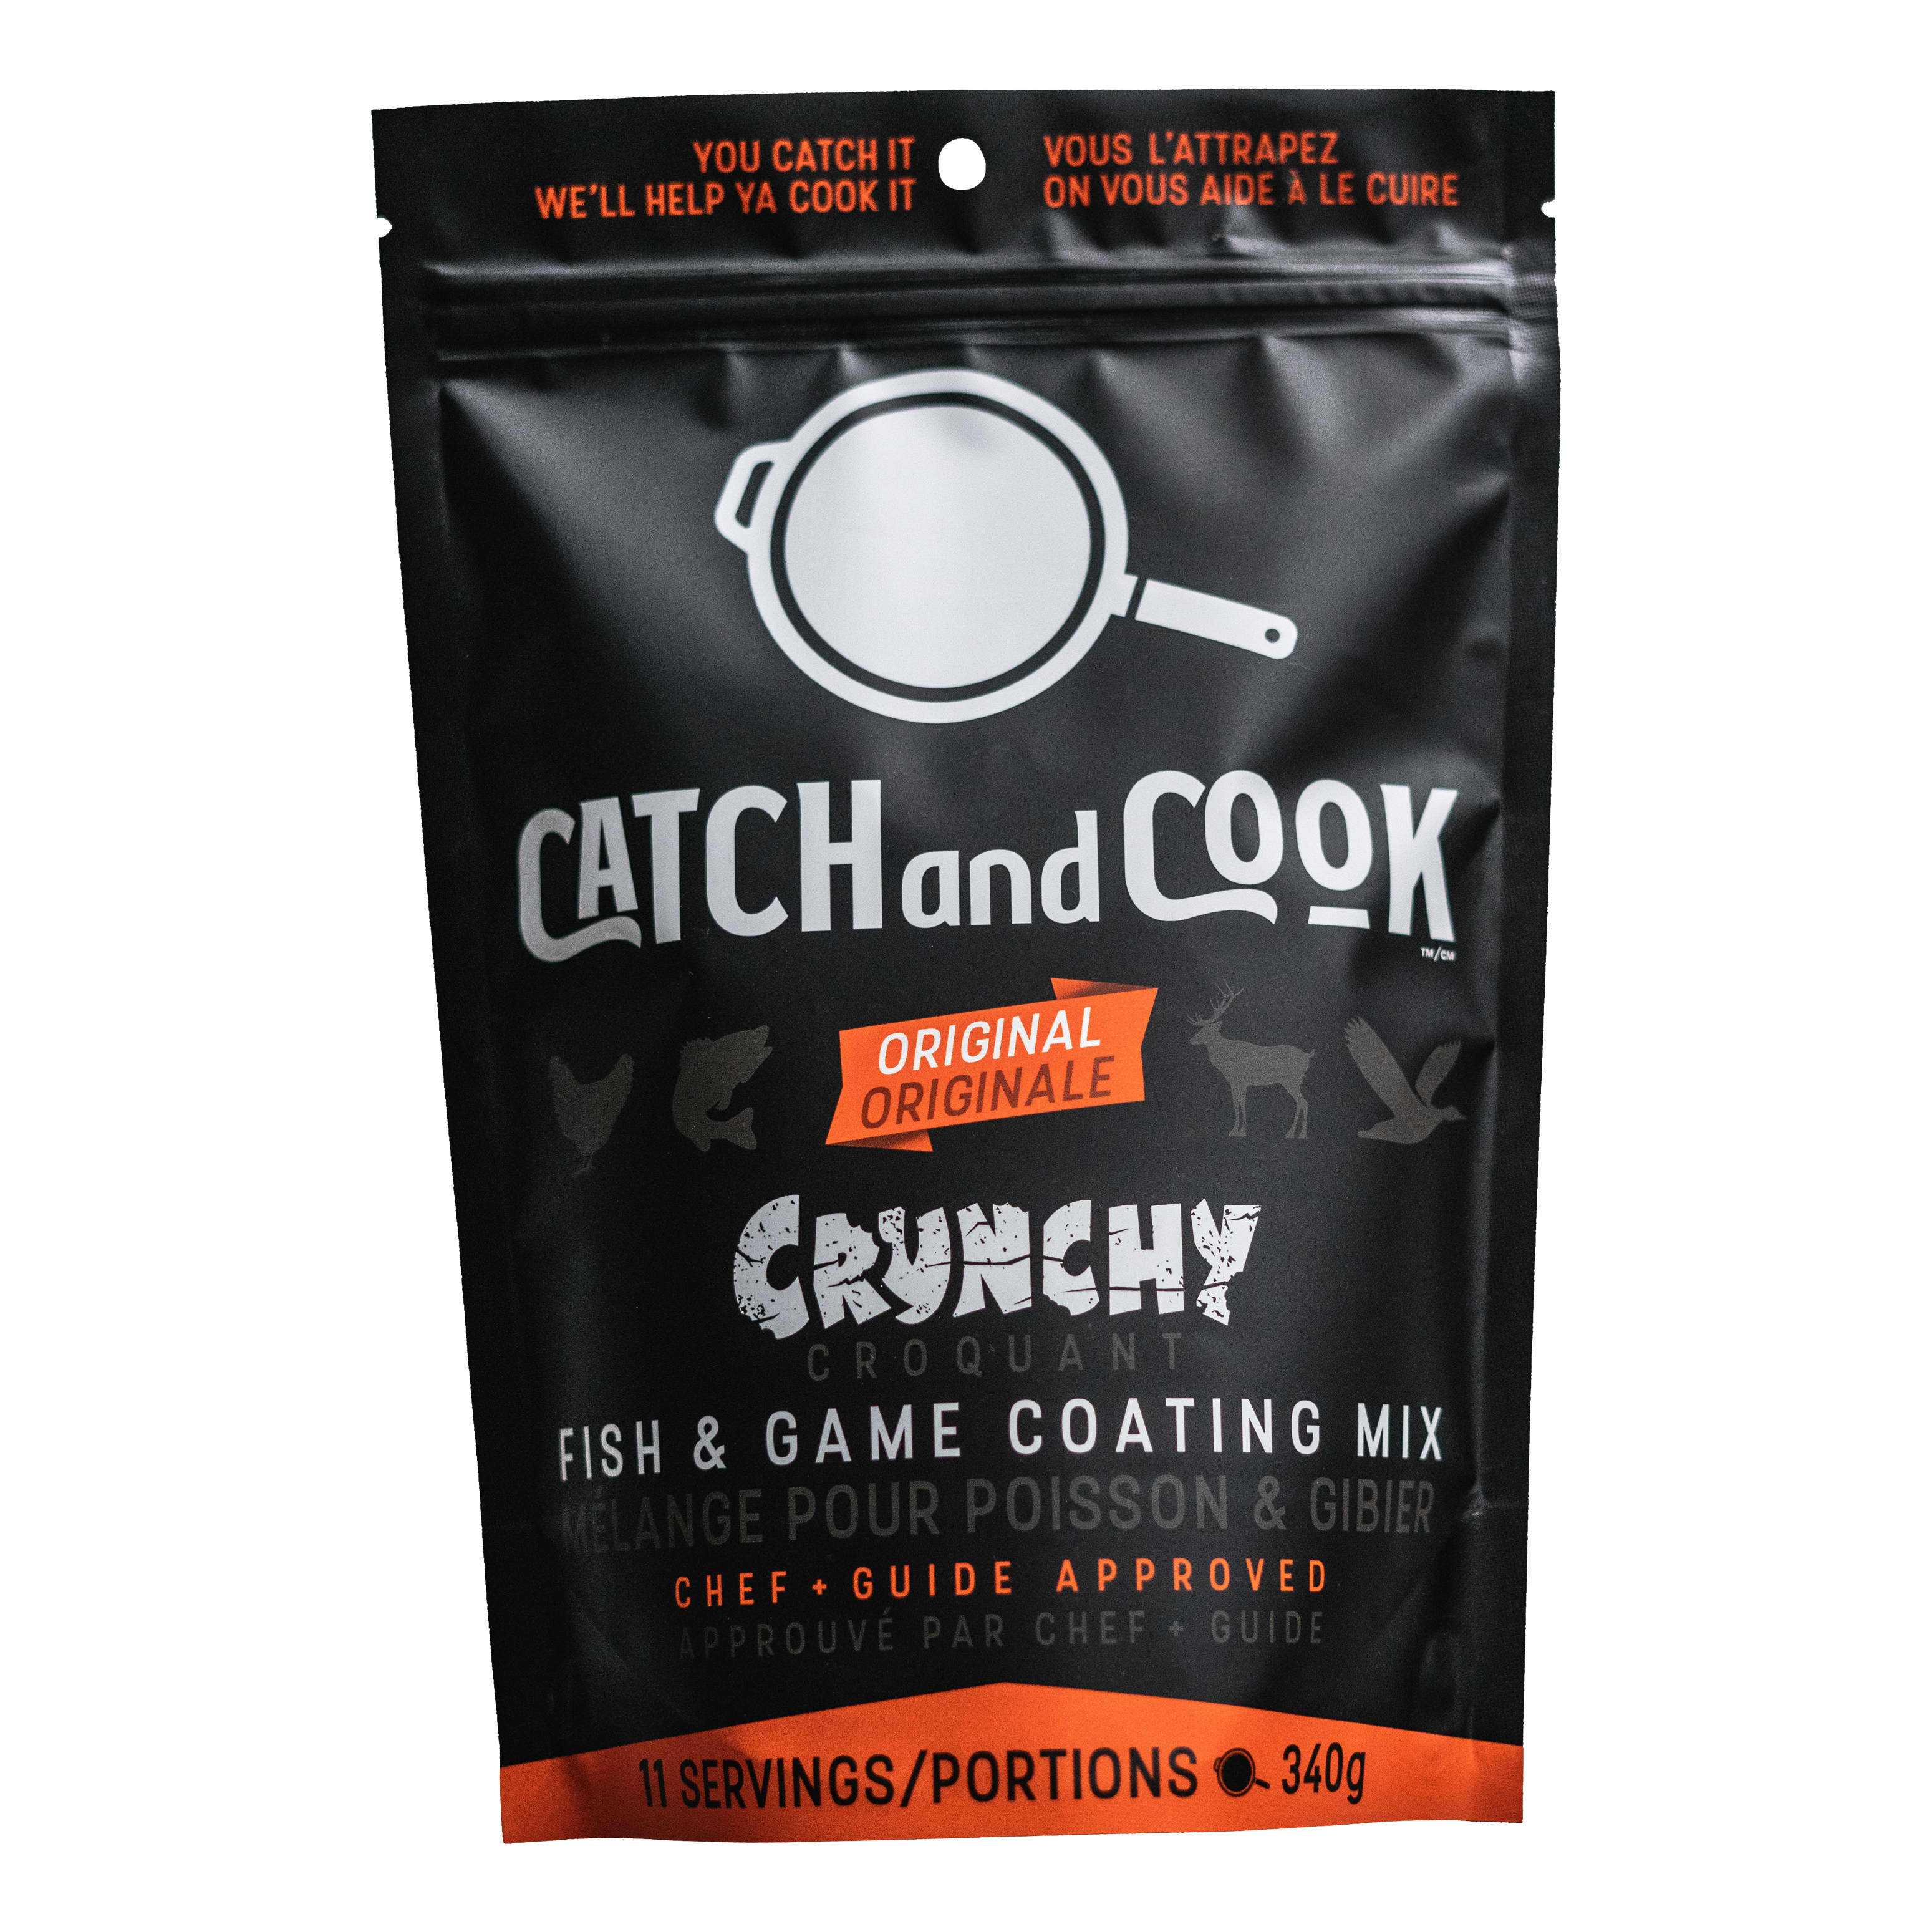 Catch and Cook Fish & Game Coating Mix - Original